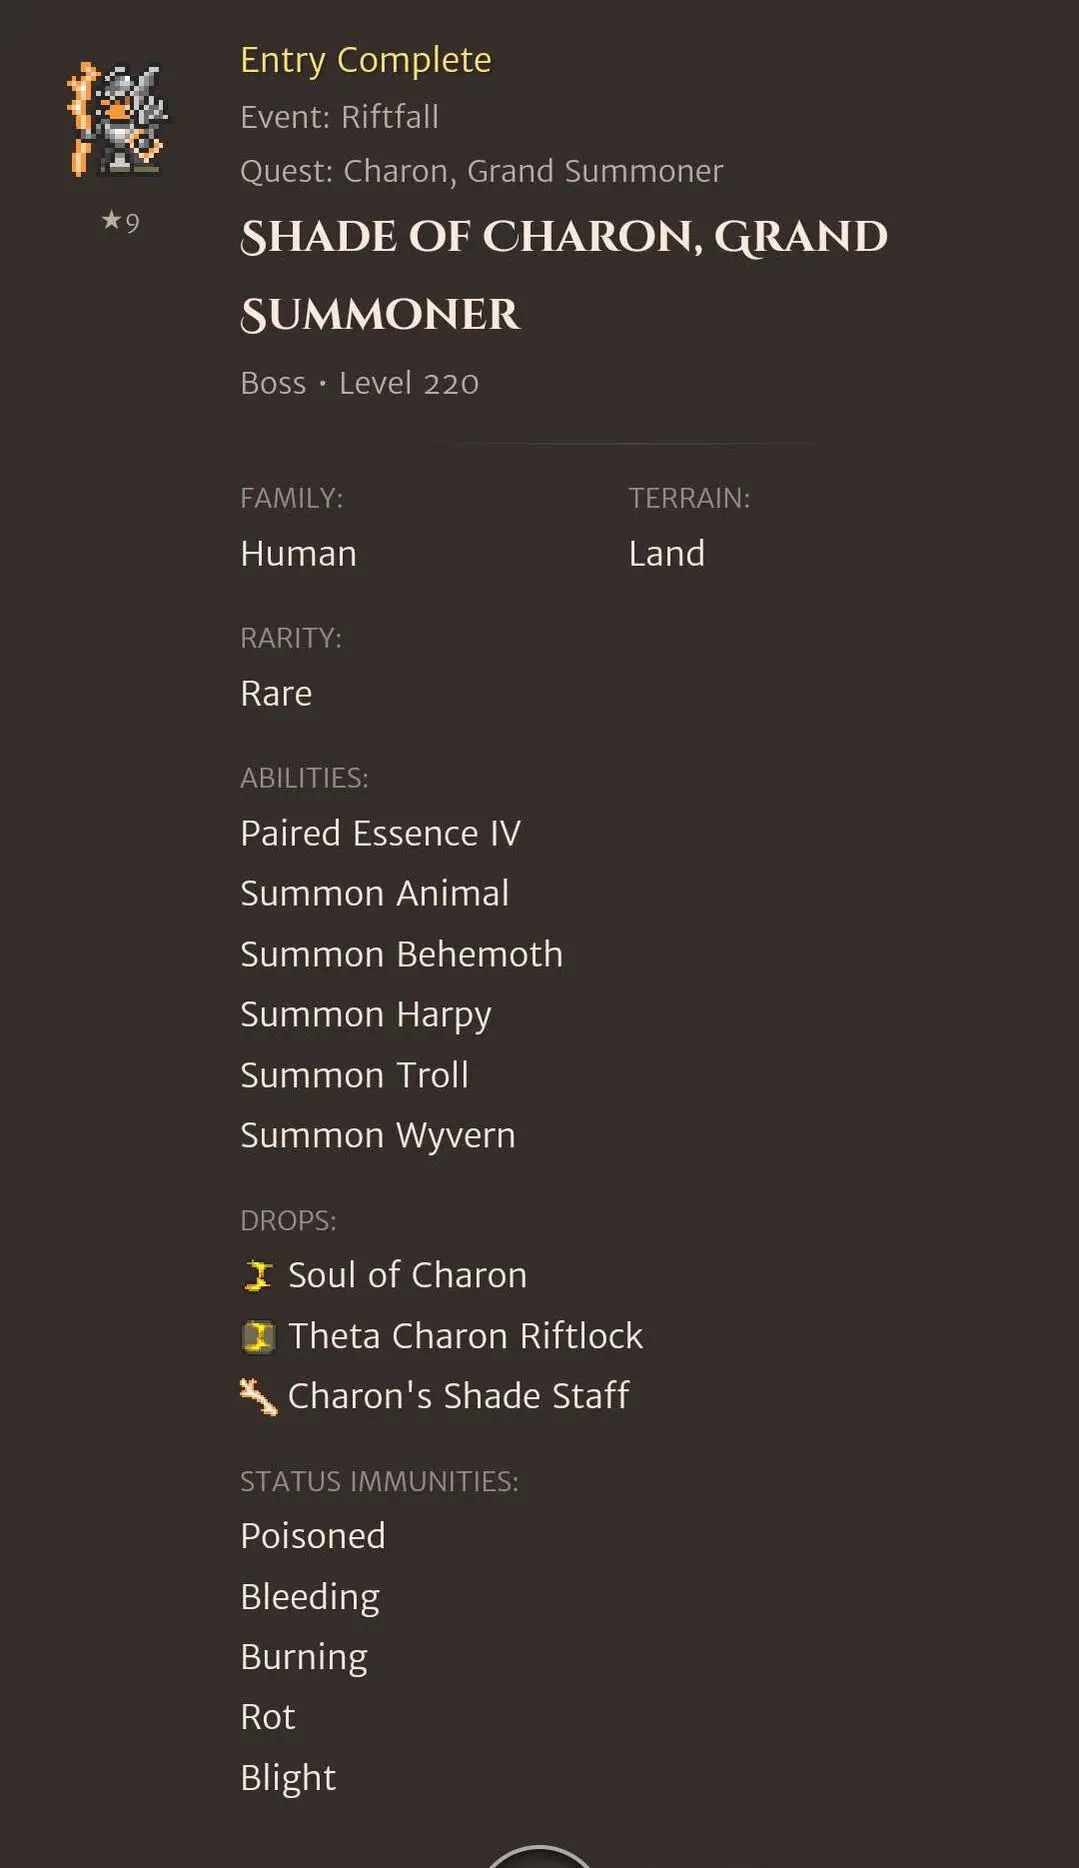 Shade of Charon, Grand Summoner codex entry